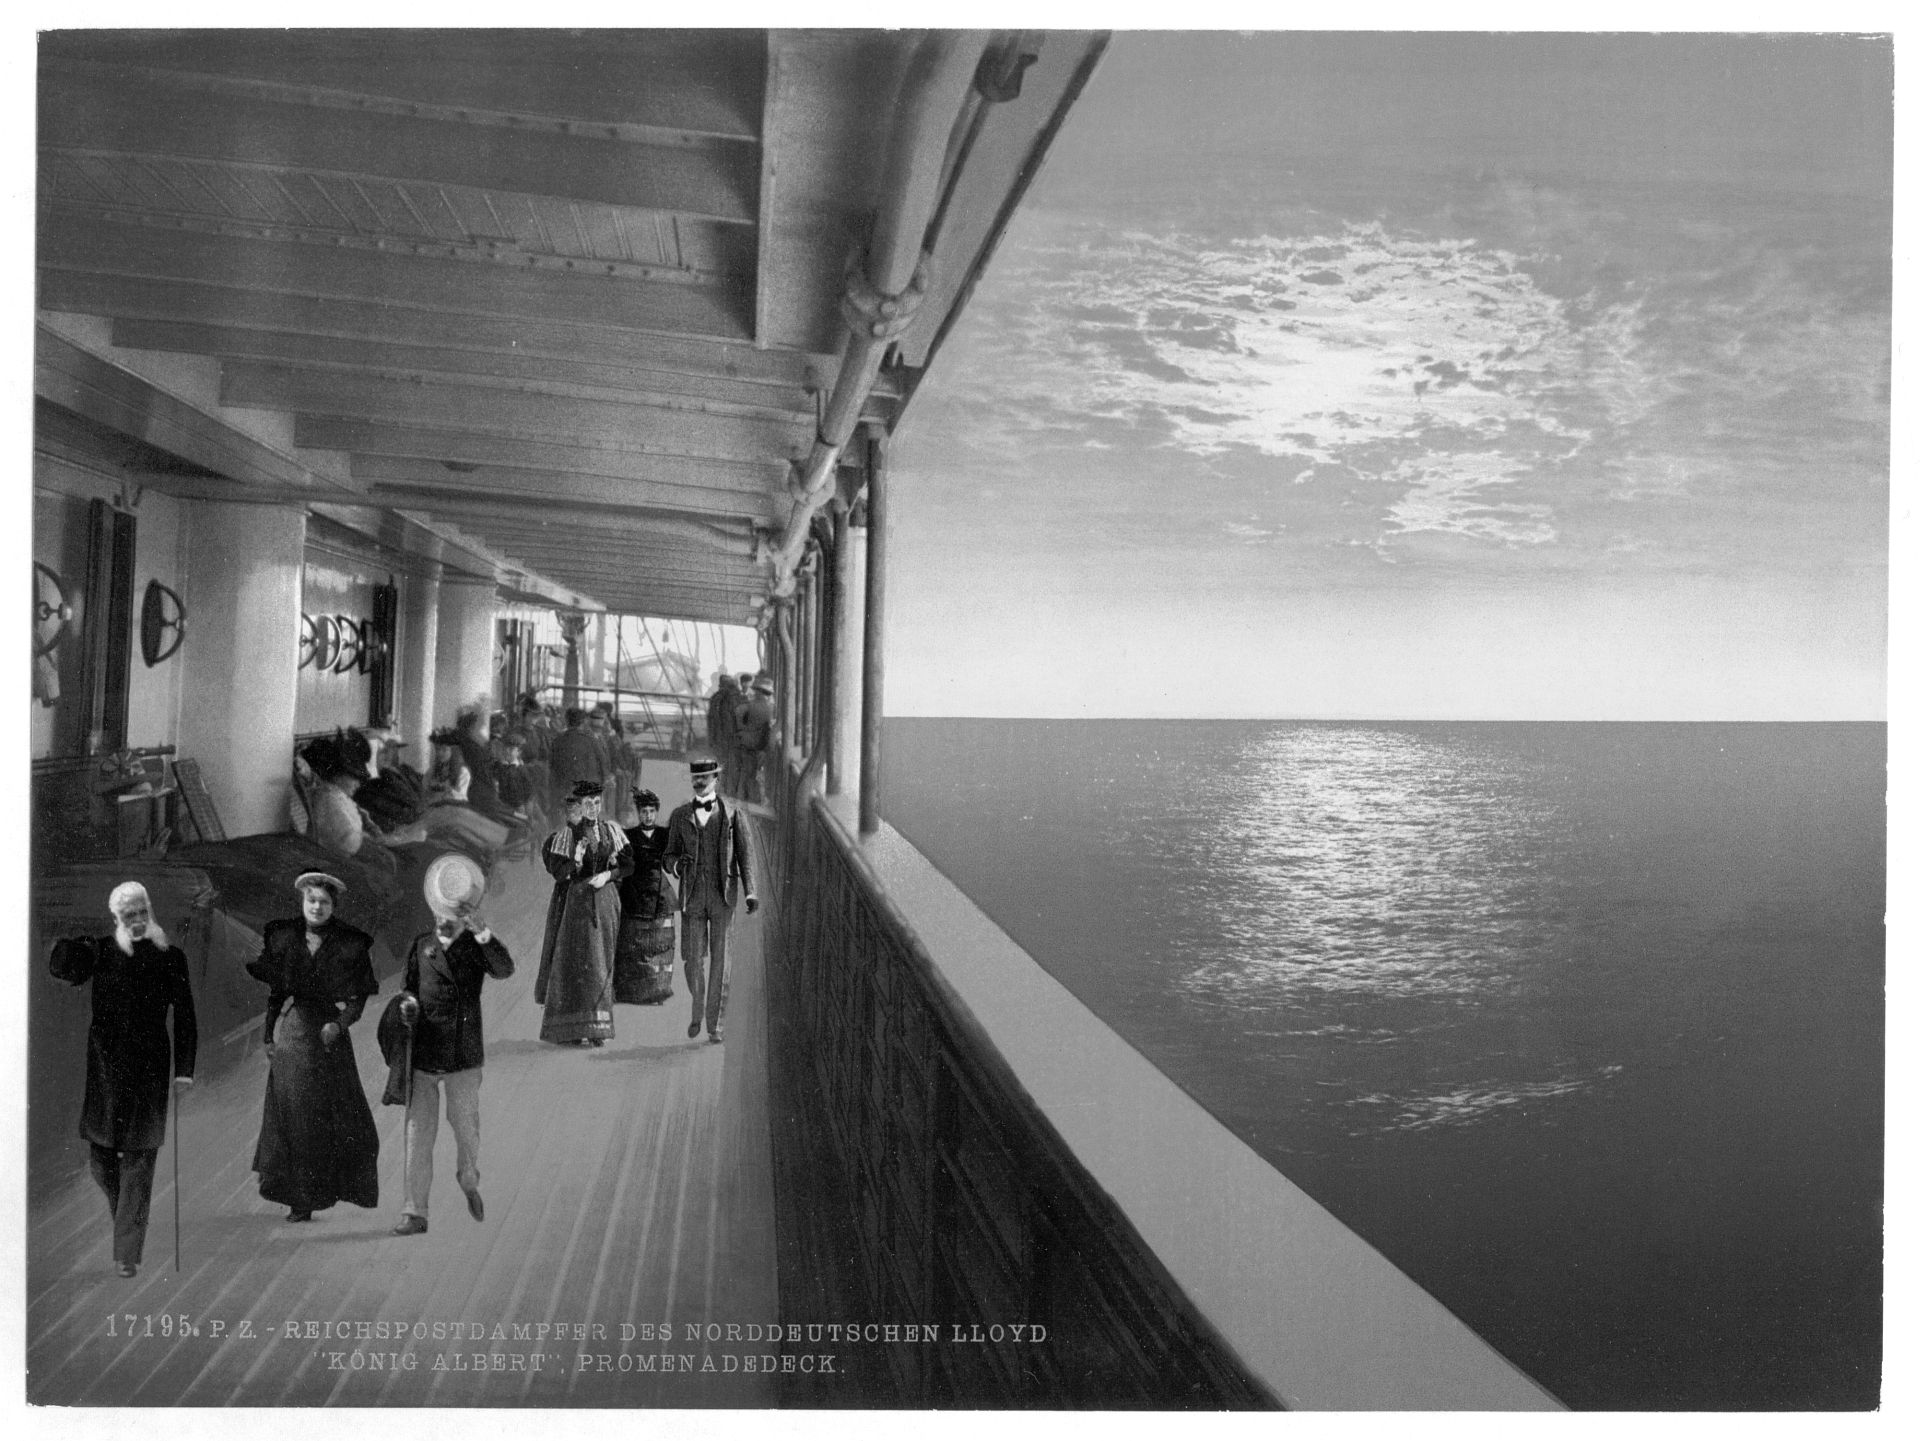 "Konig Albert," Promenade Deck, North German Lloyd, Royal Mail Steamers